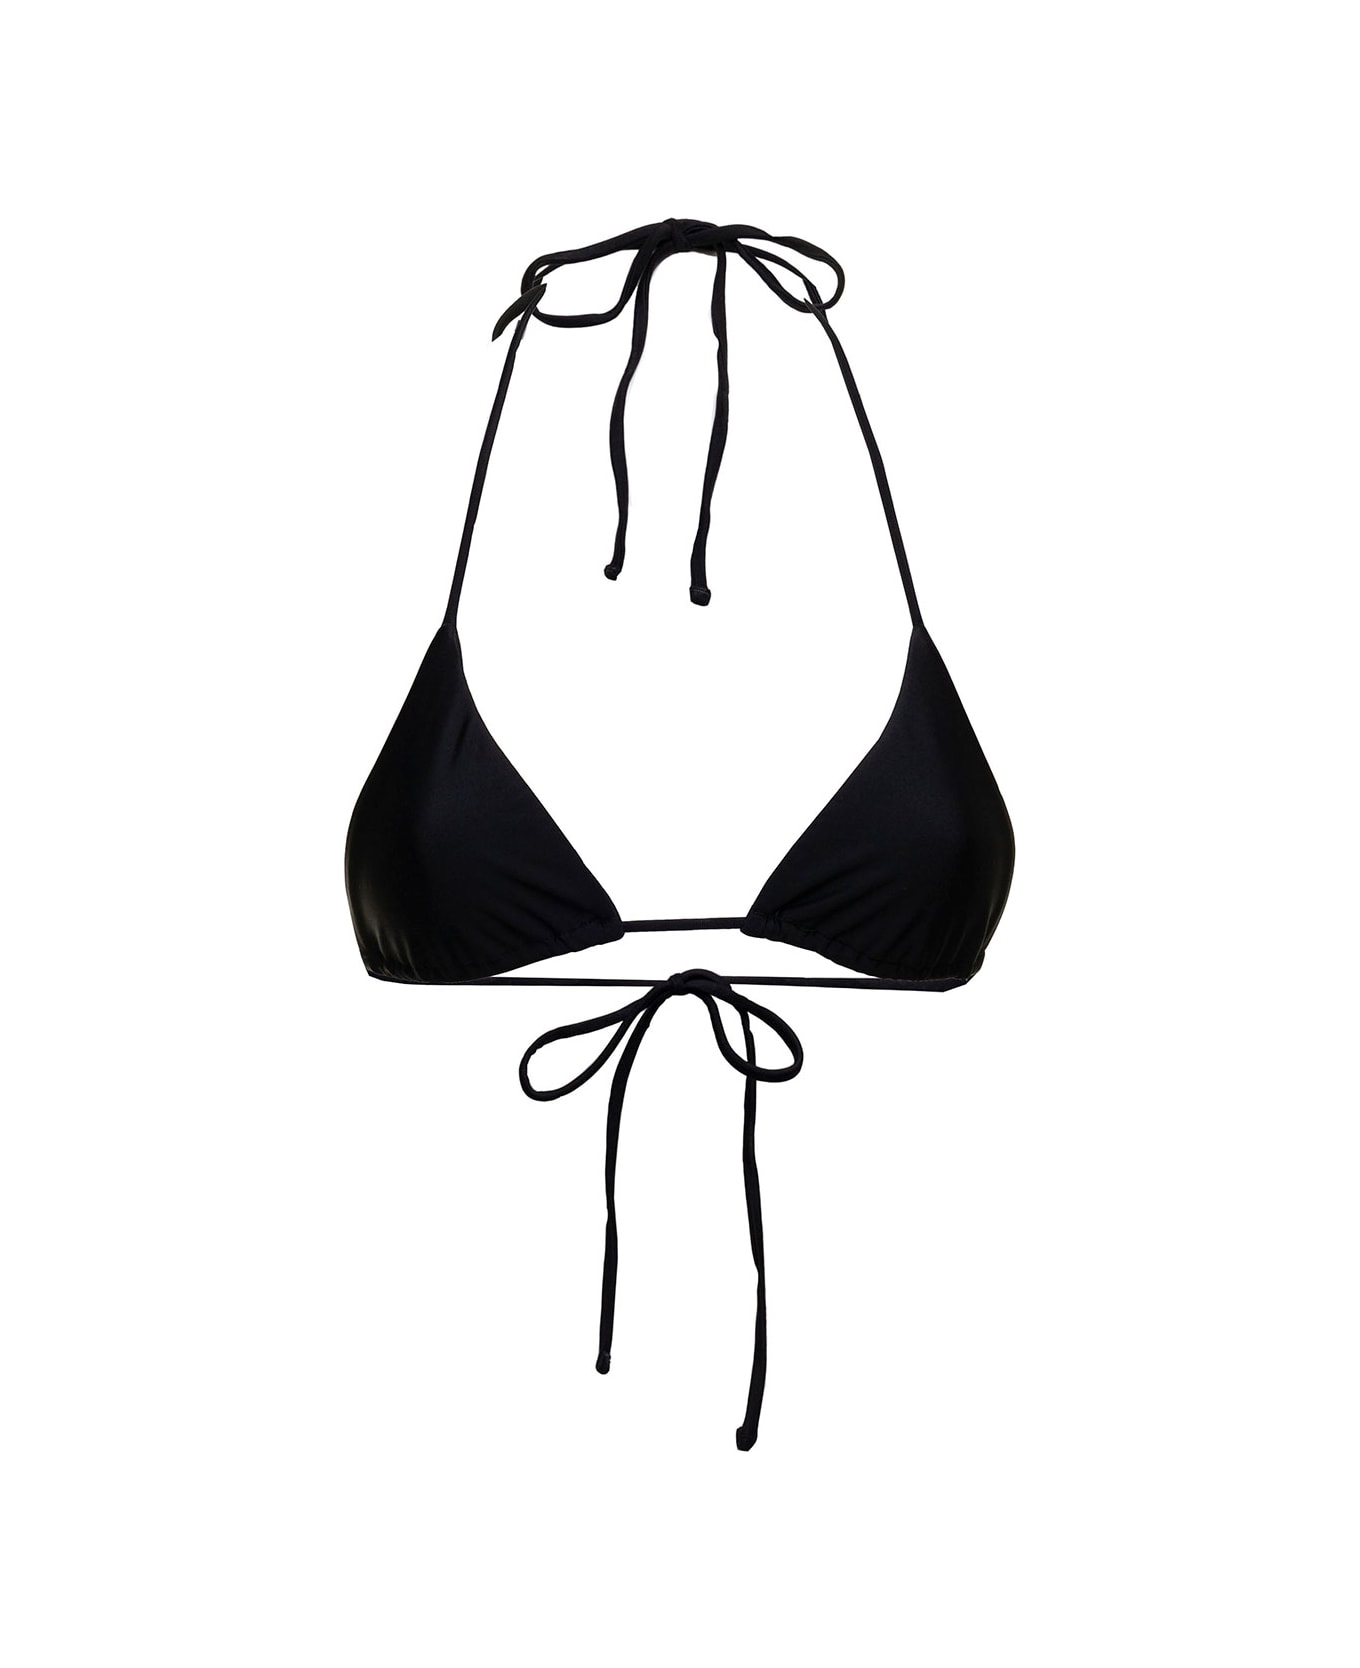 MATTEAU Woman's Tringolar Stretch Fabric Bikini Top - Black